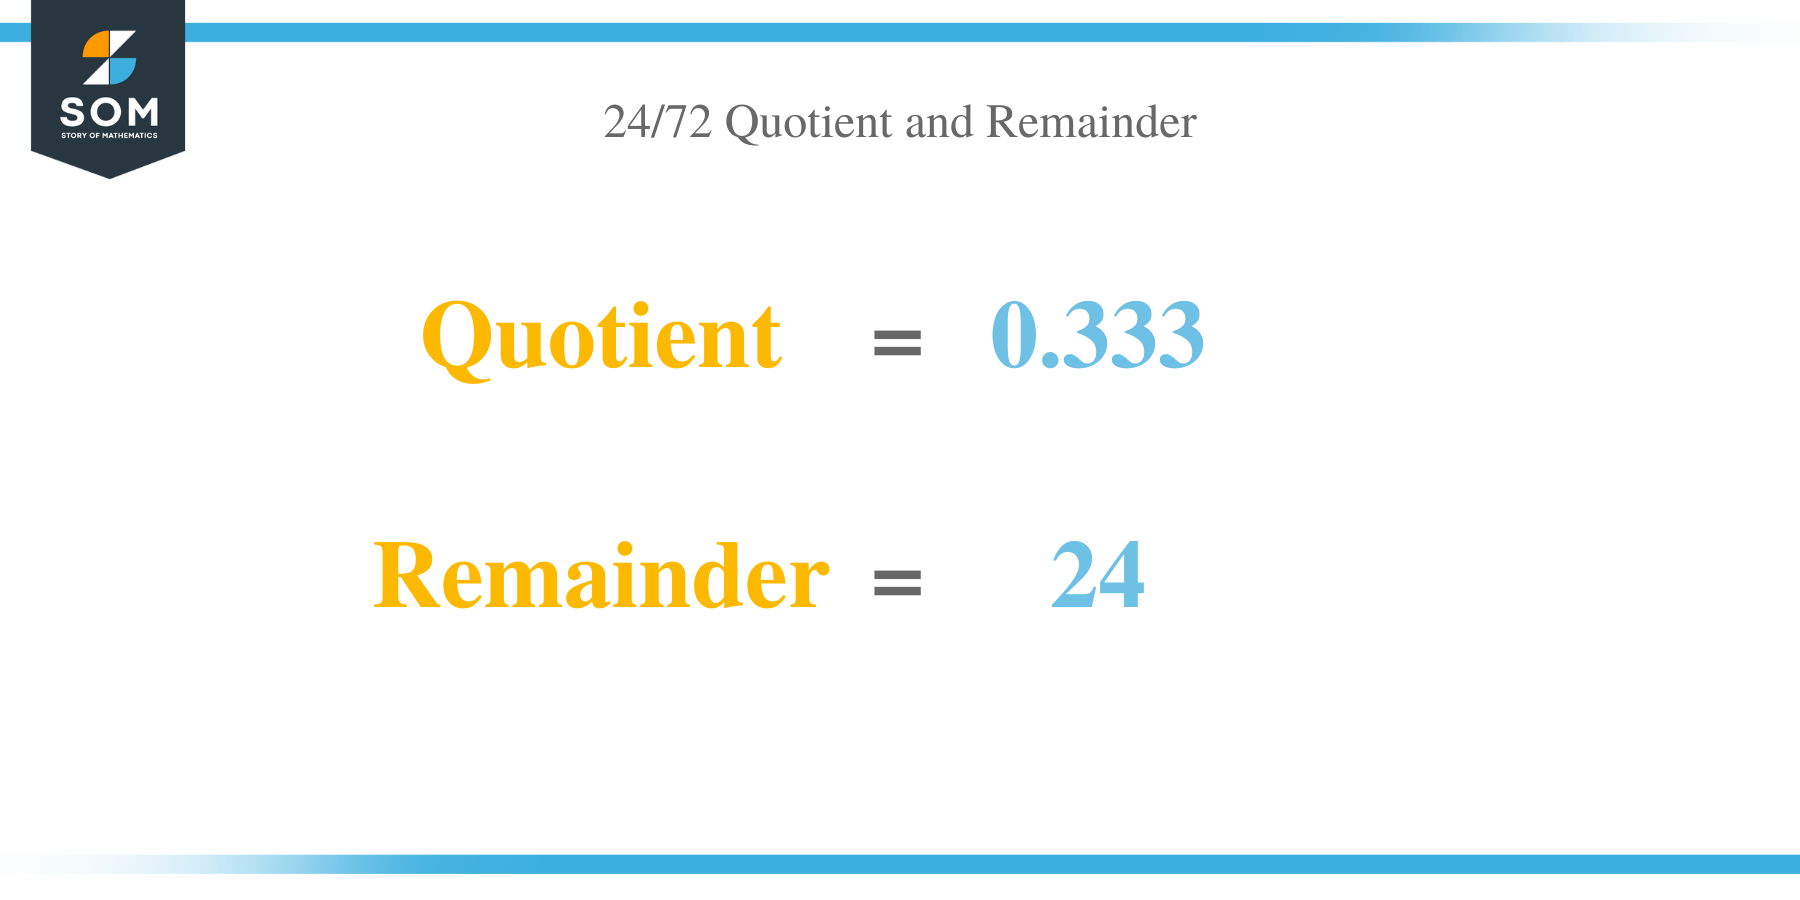 Quotient and Remainder of 24 per 72